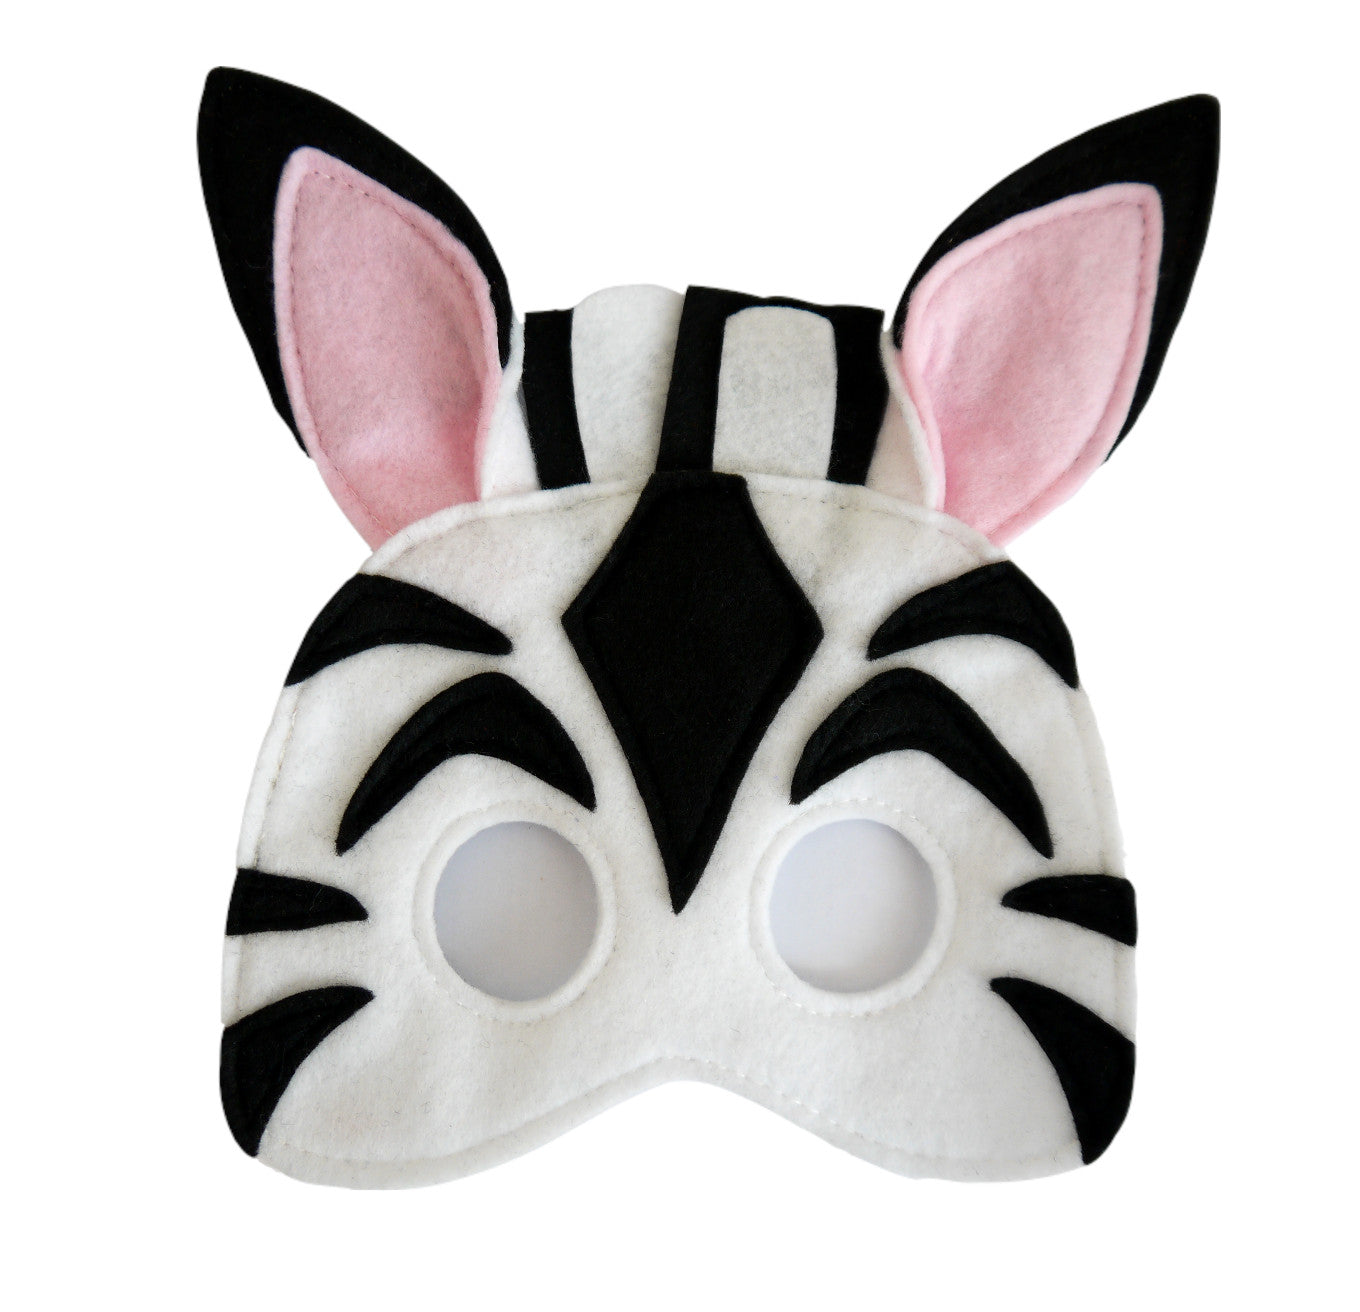 Zebra costume, mask, body and tail.